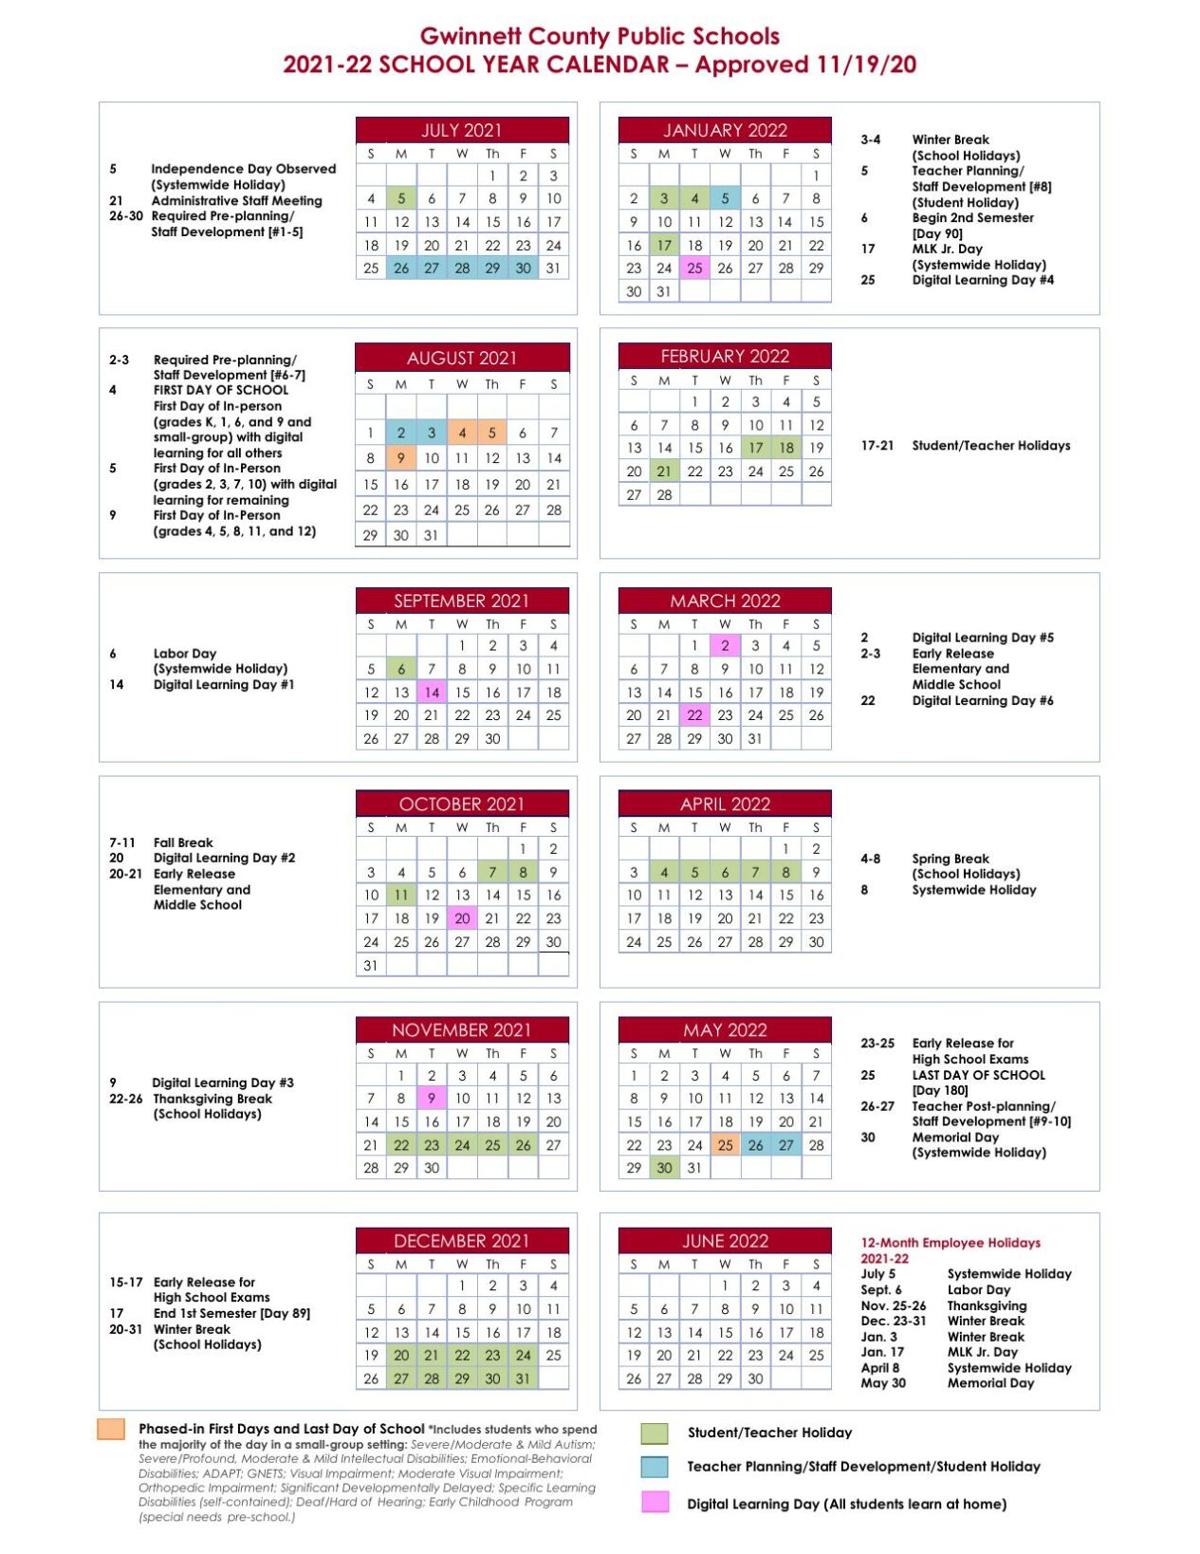 Missouri State University Academic Calendar 2022 2023 Gwinnett County Public Schools' 2021-2022 School Year Calendar | |  Gwinnettdailypost.com